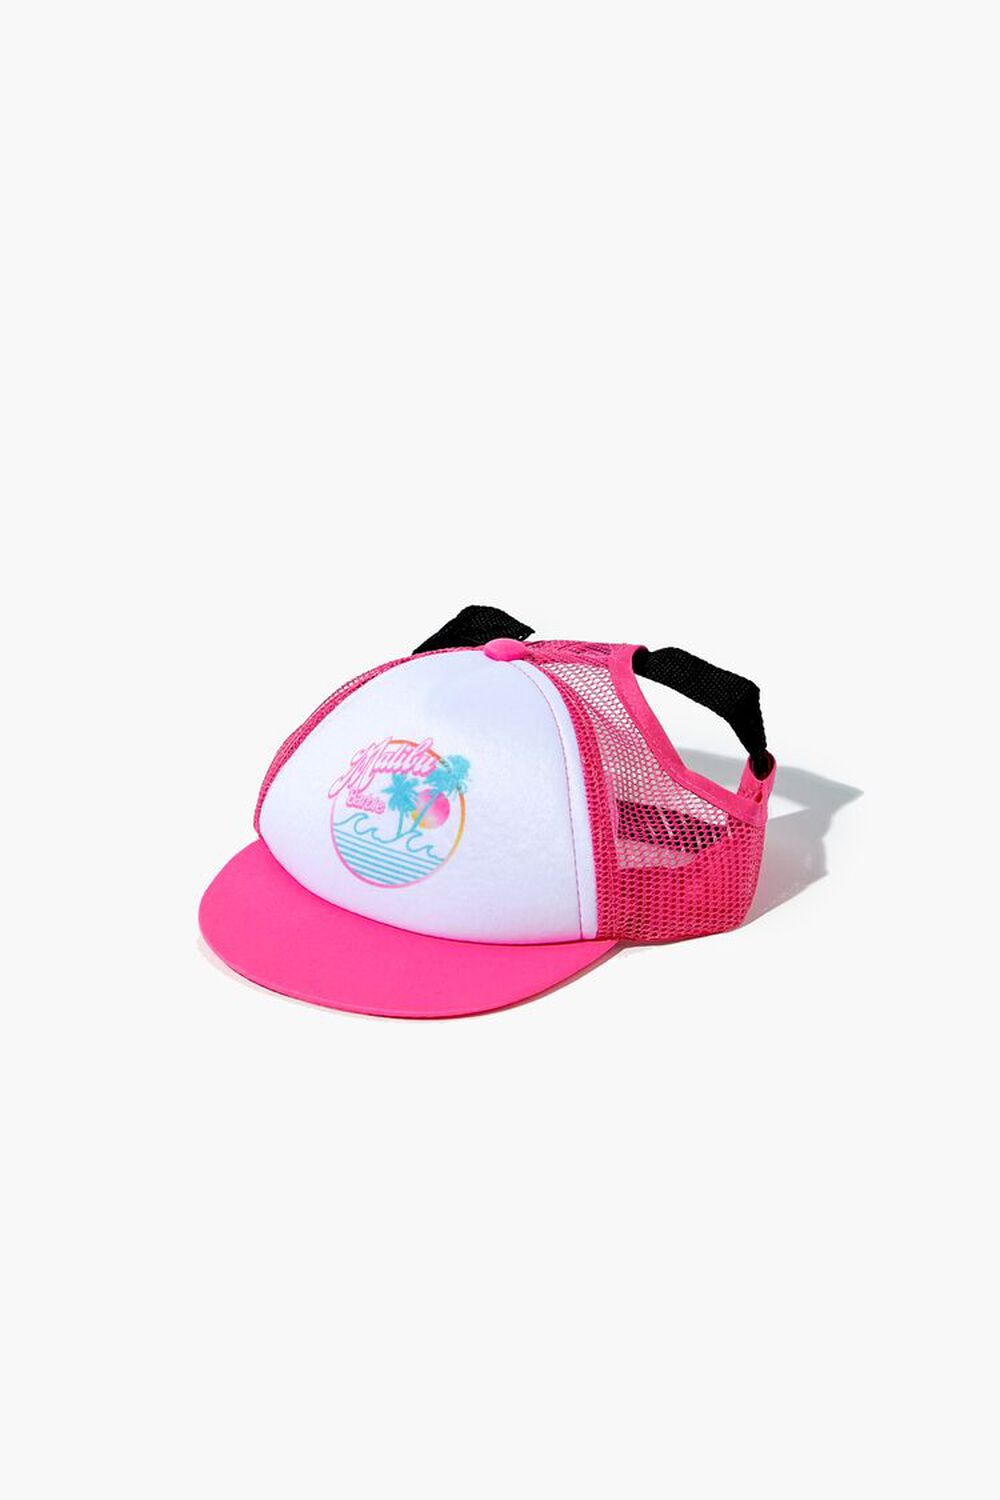 PINK Malibu Barbie™ Pet Baseball Cap, image 2